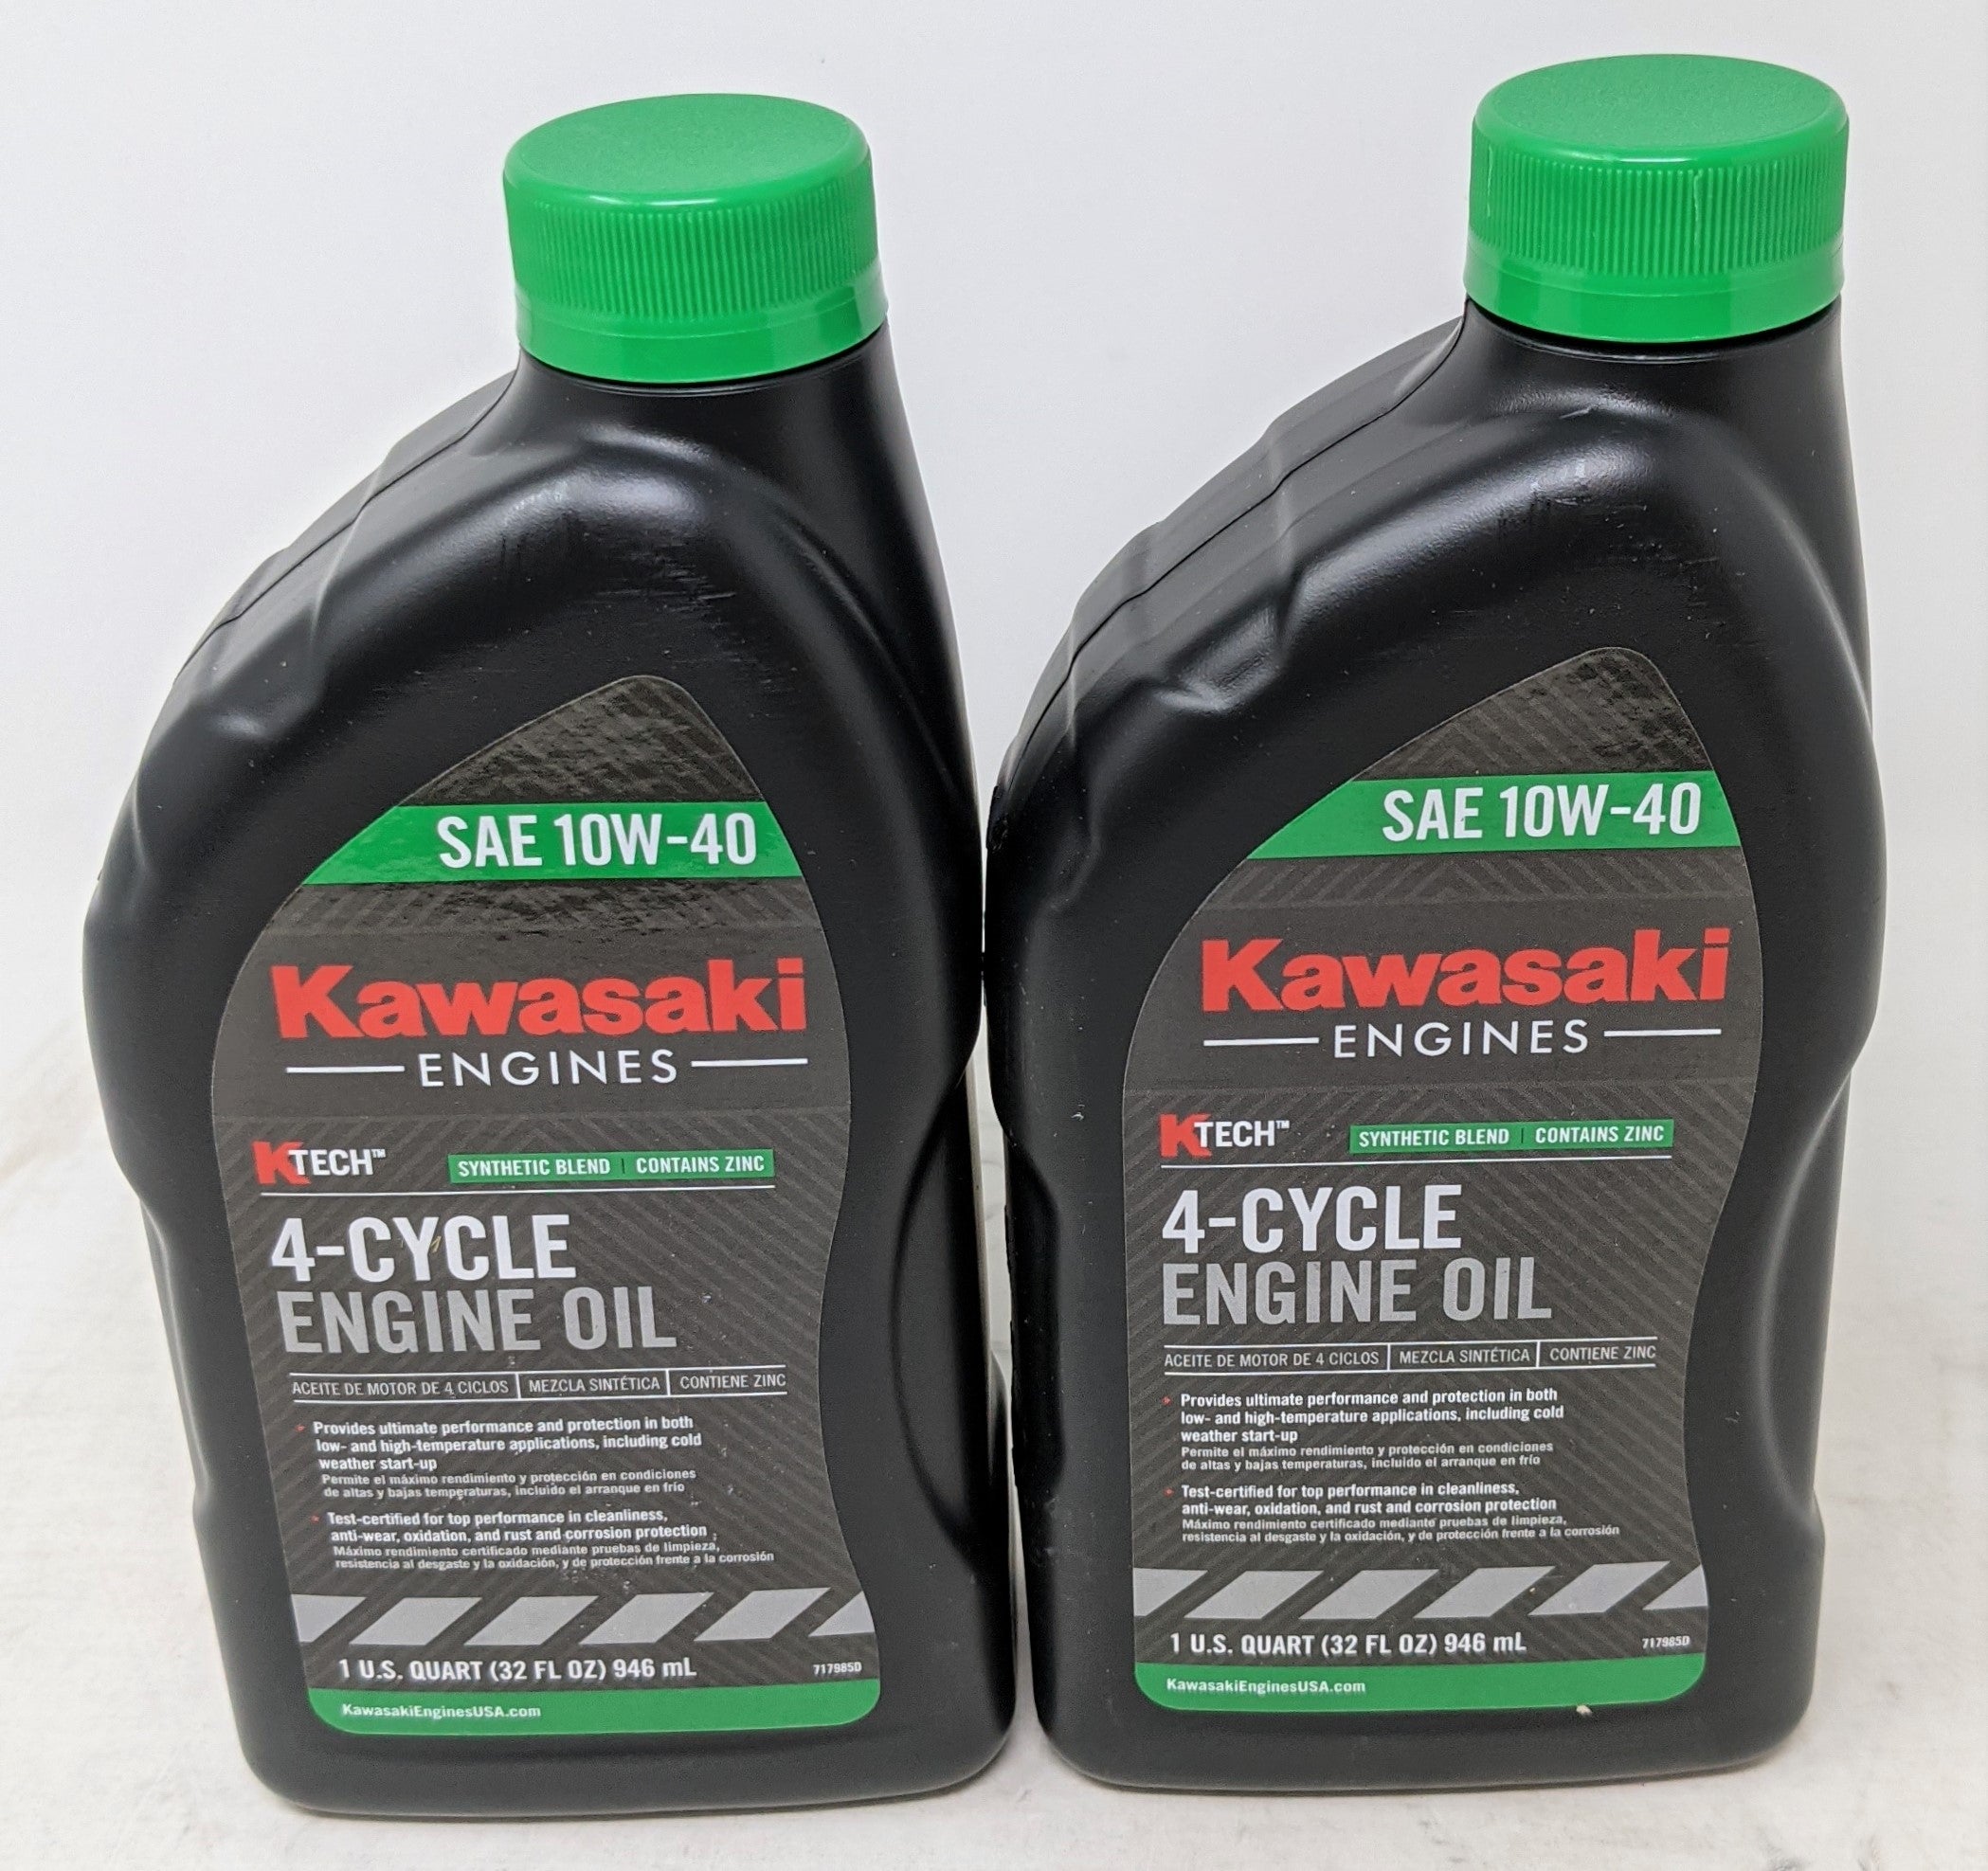 Kawasaki K-Tech SAE 10W-40 Engine Oil Quart - 2 Pack (64 oz) #99969-6296 x 2